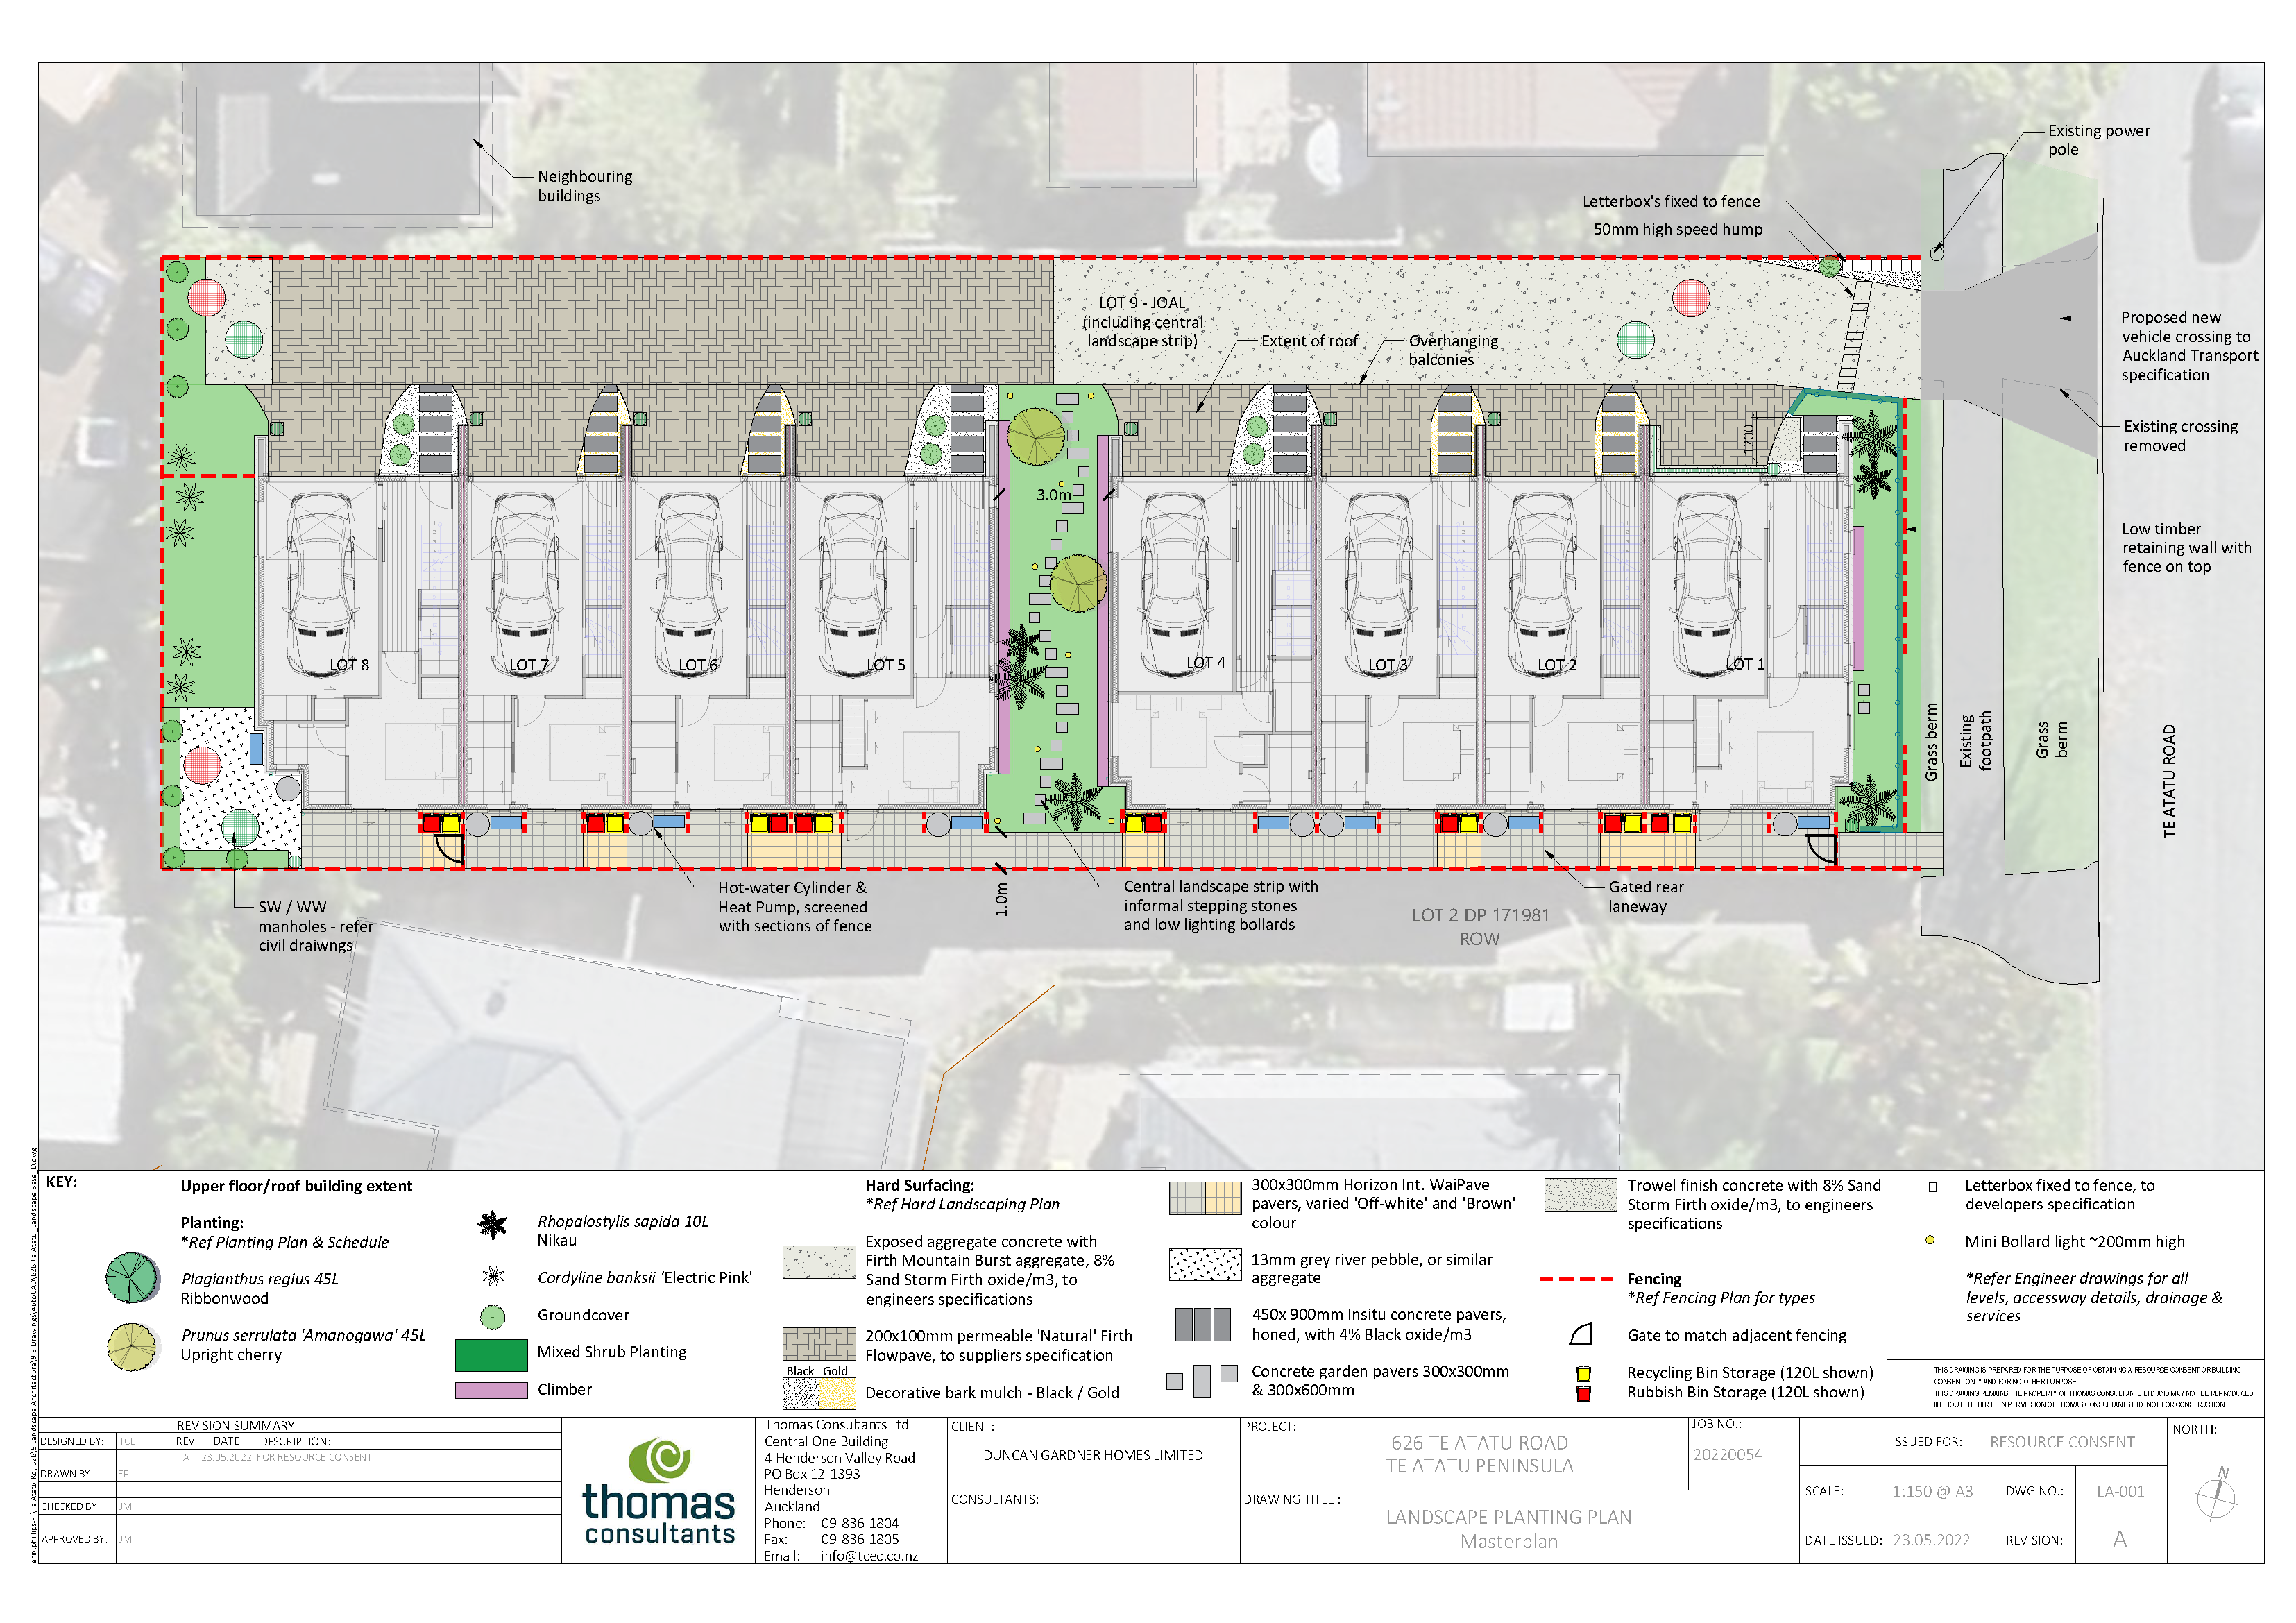 Te Atatu road development - landscape plans for resourcec consent